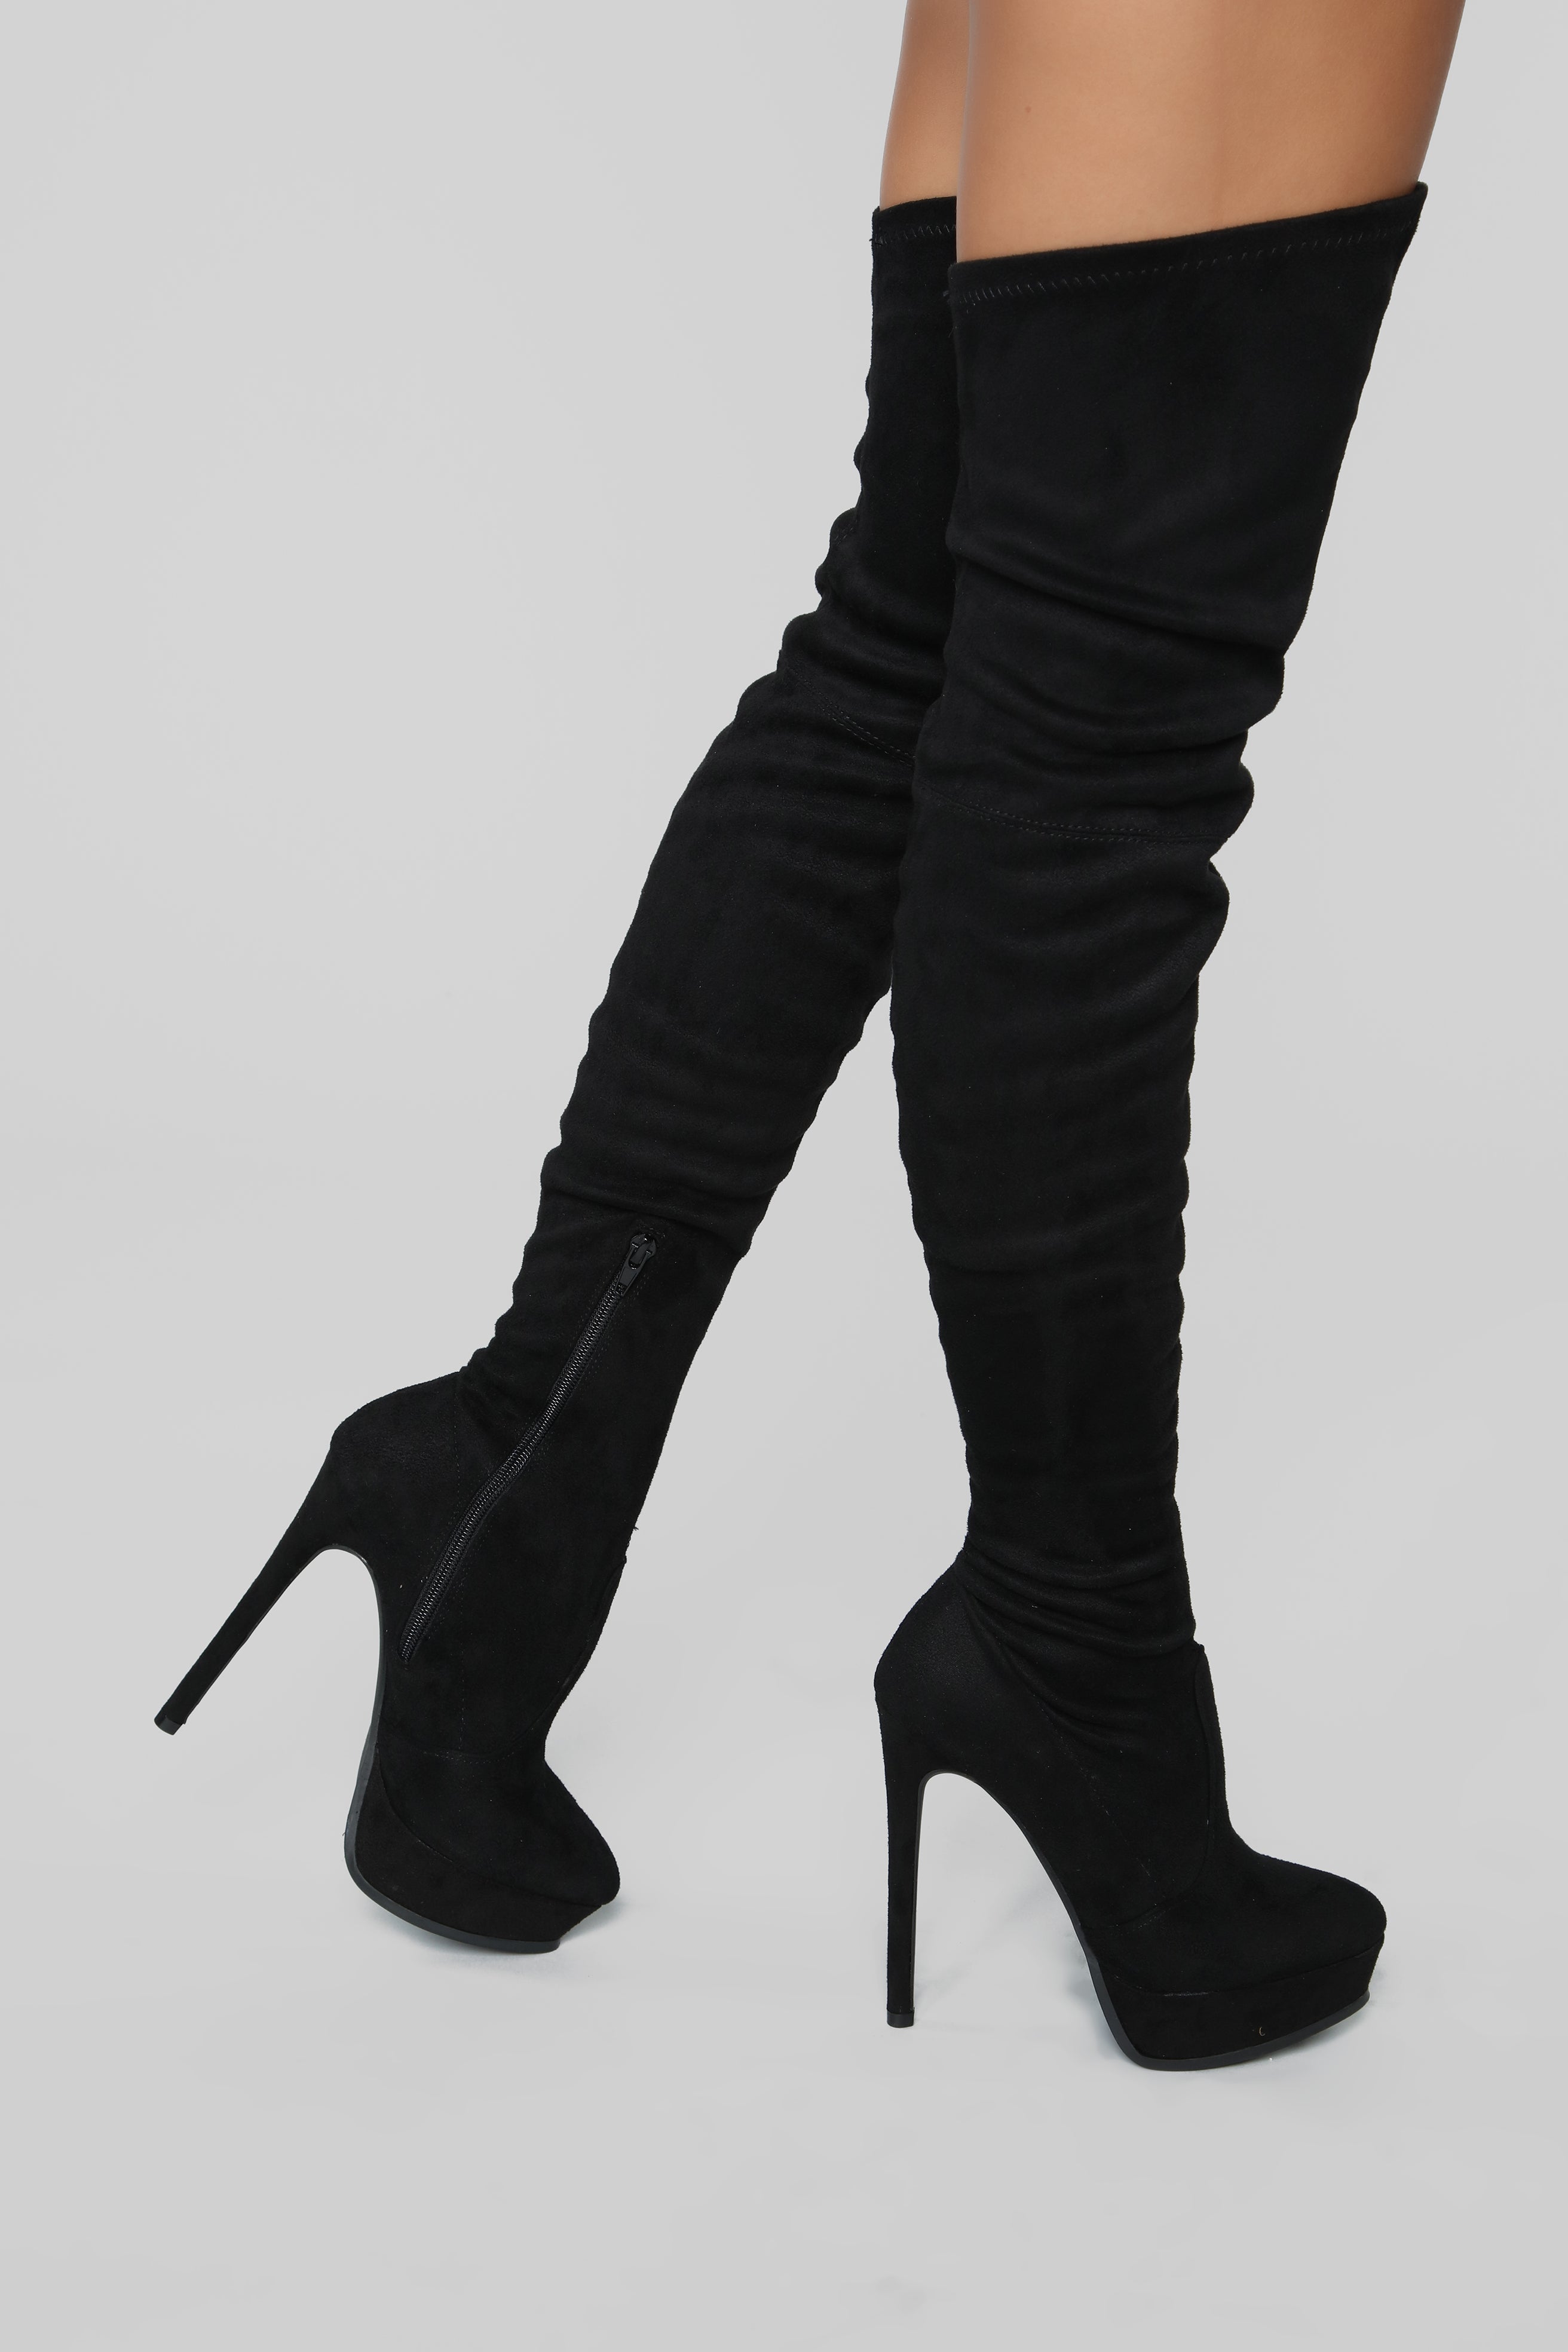 thigh high boots fashion nova